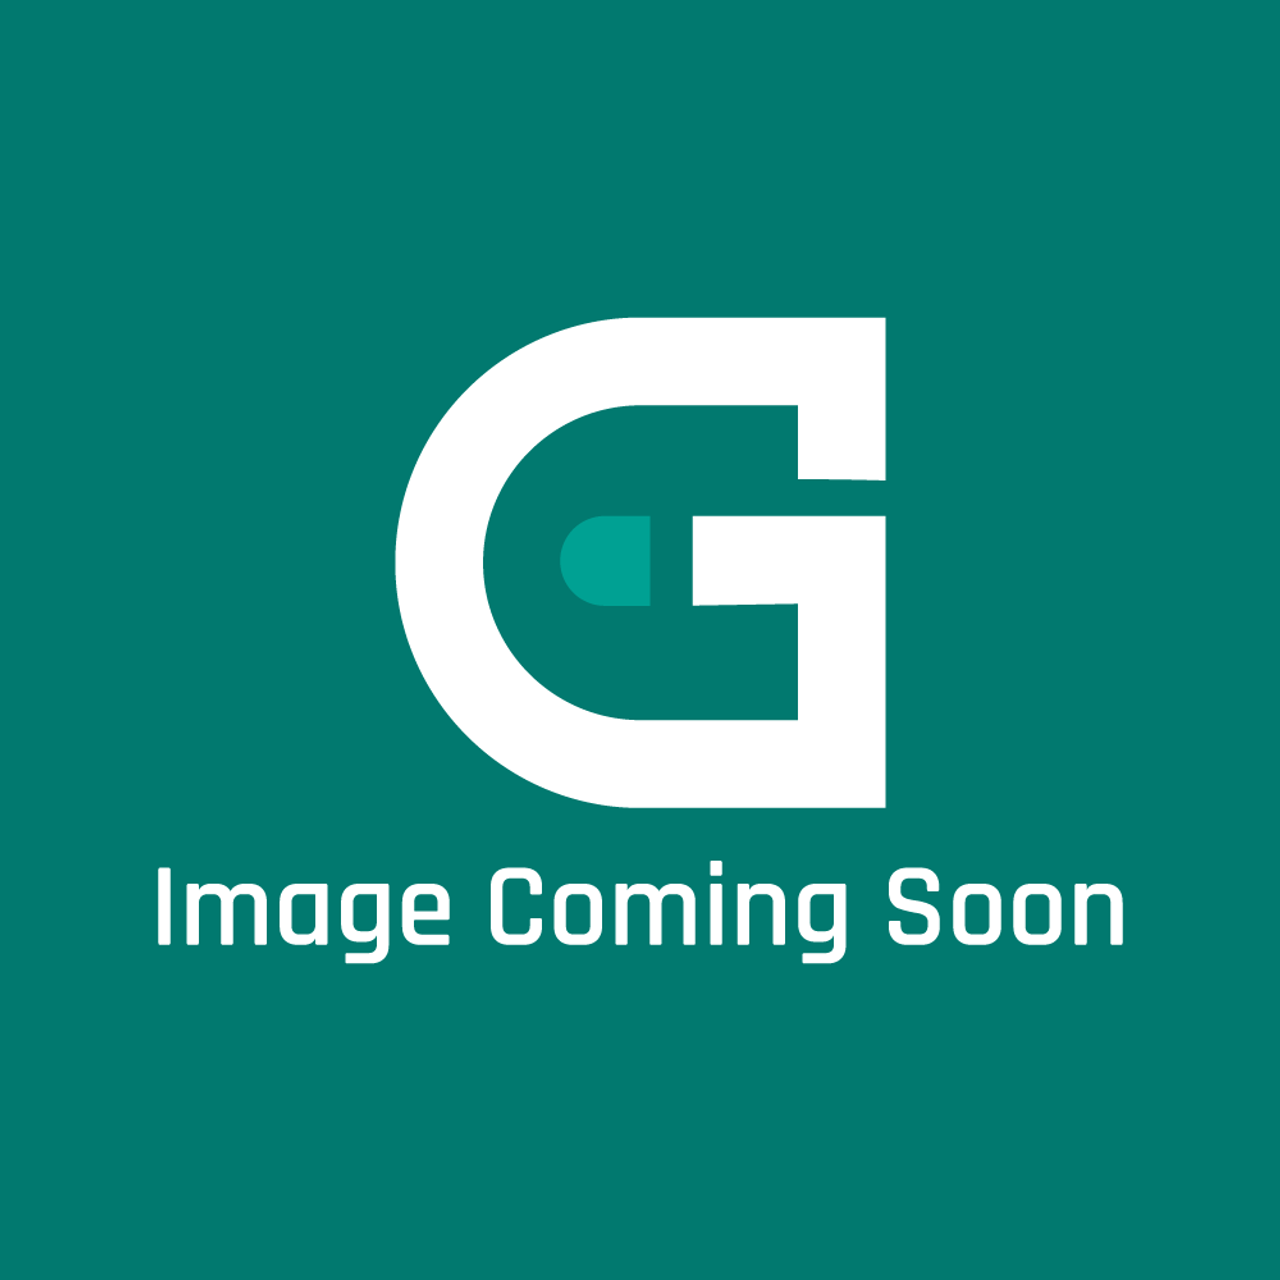 Garland 4525055 - 60Vp Gfe Bbbbb C - Image Coming Soon!